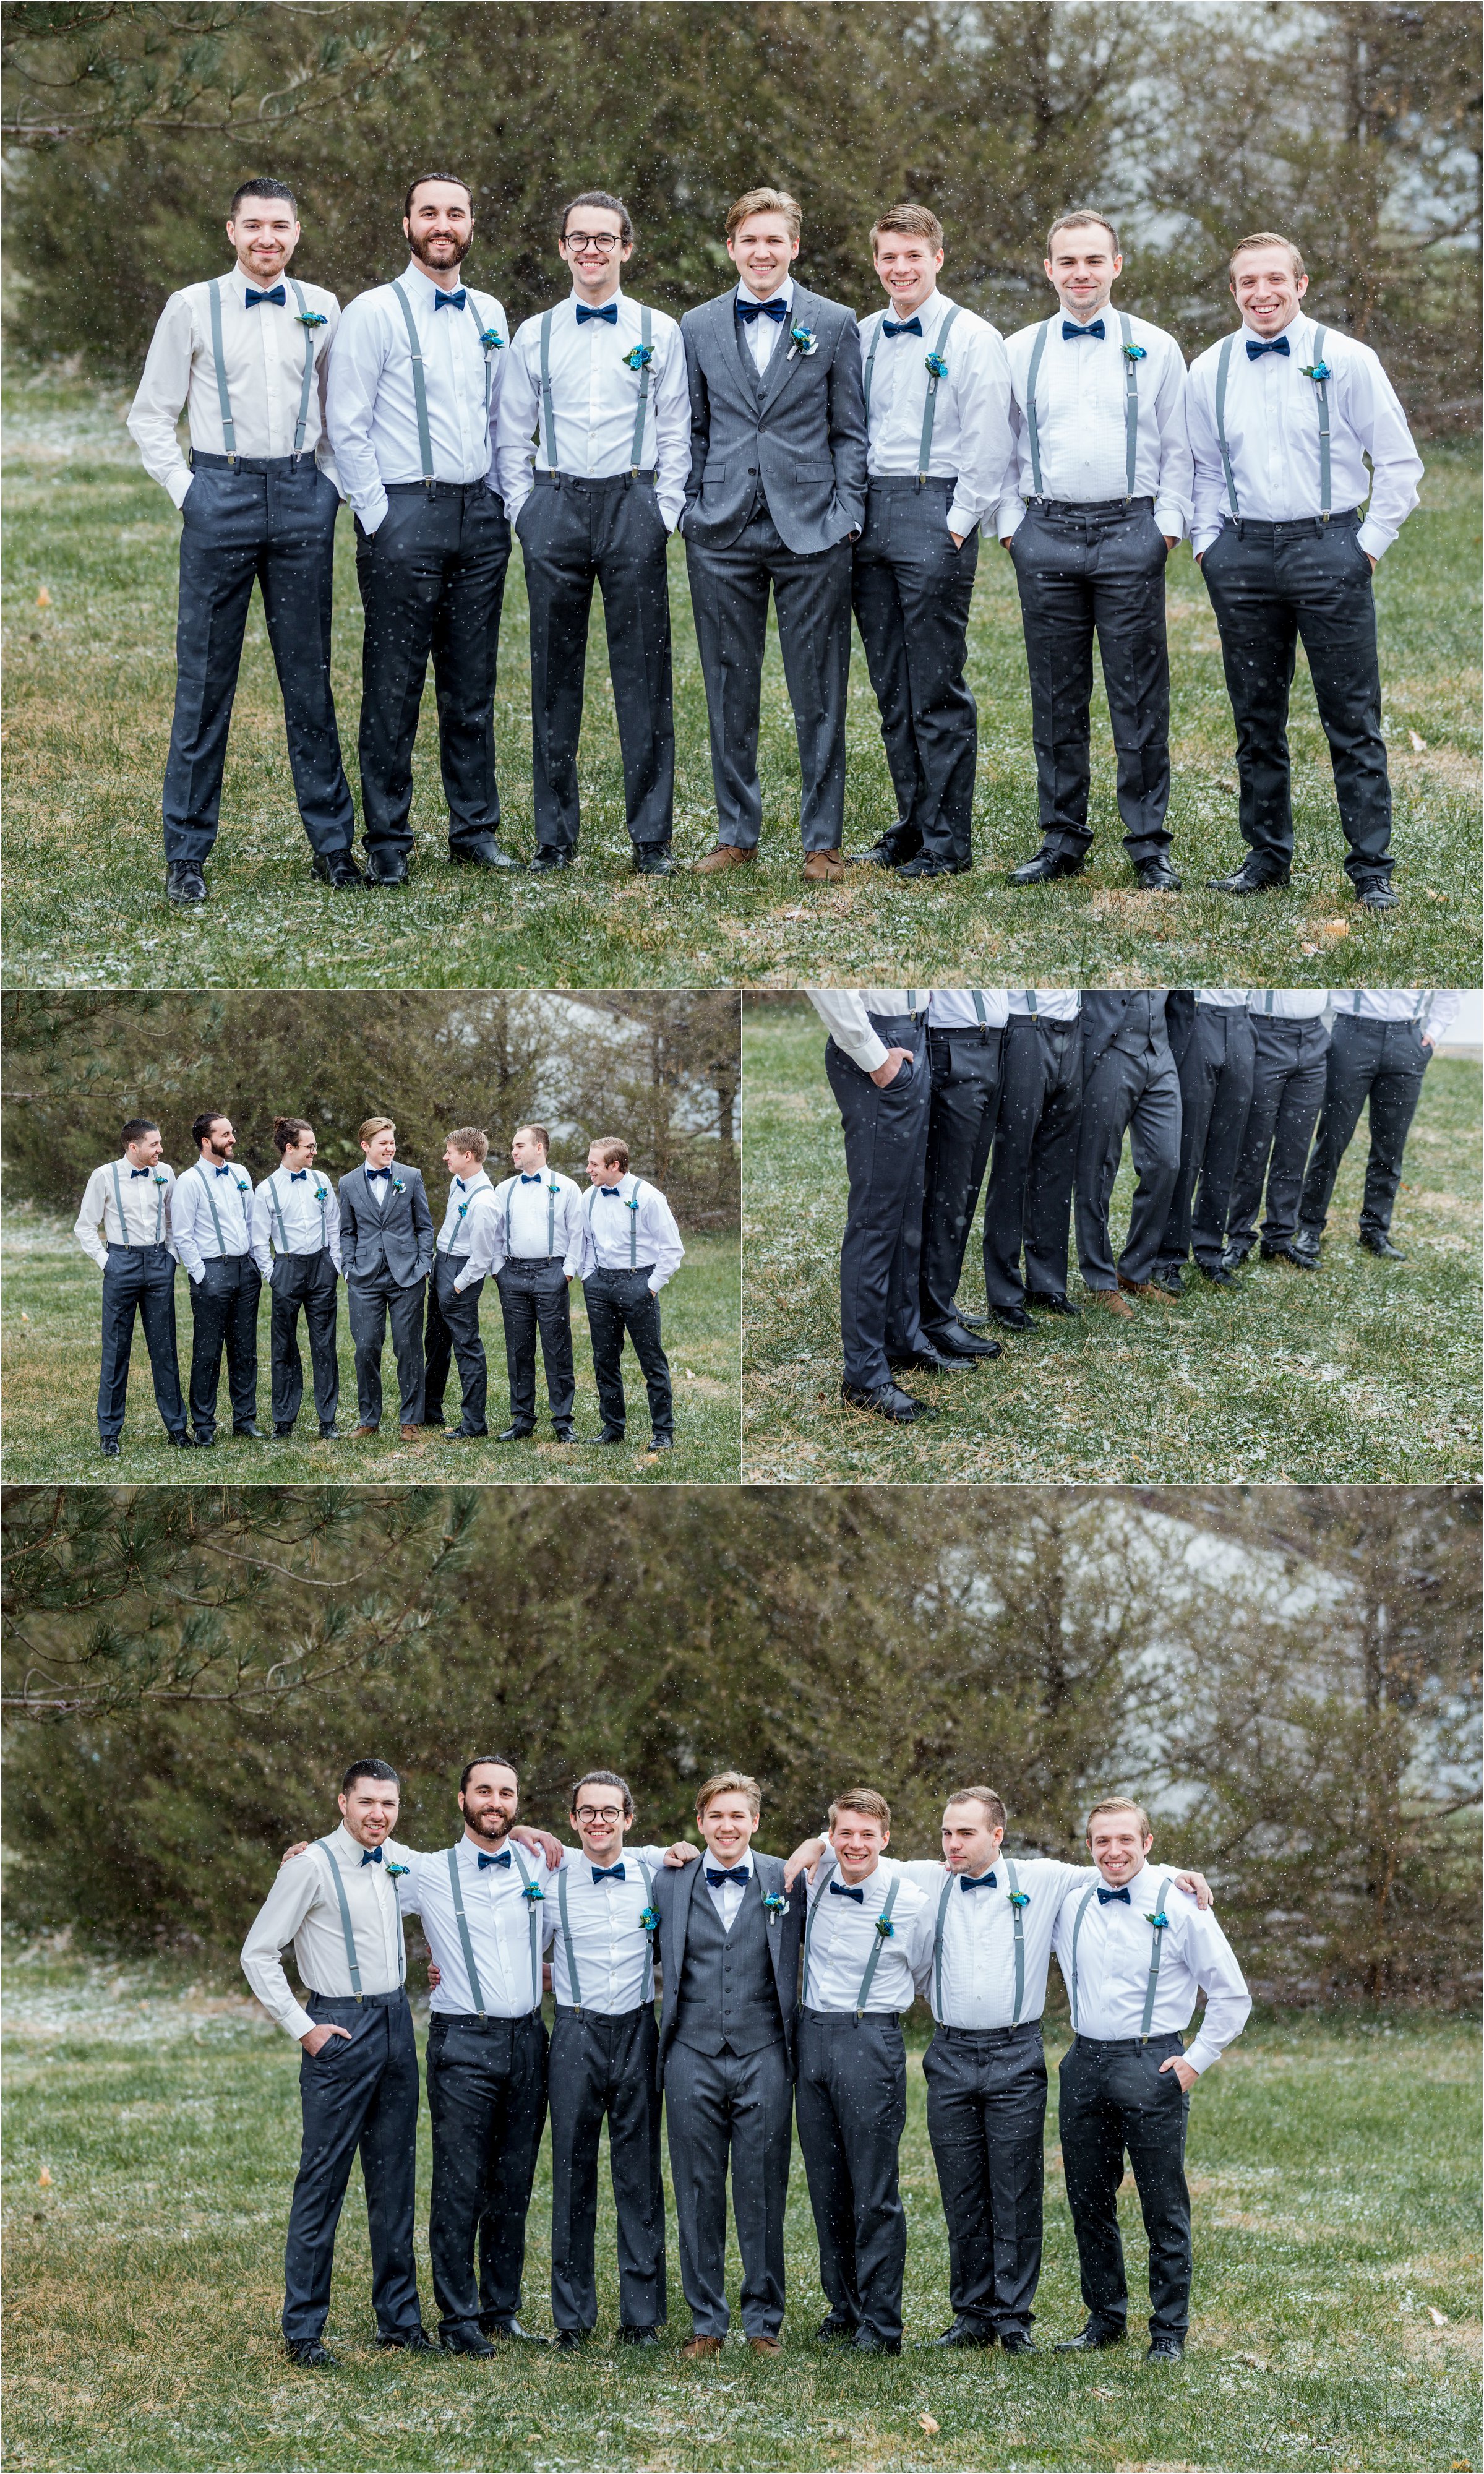 Lincoln, Nebraska Wedding at Camp Solaris by Greeley, Colorado Wedding Photographer